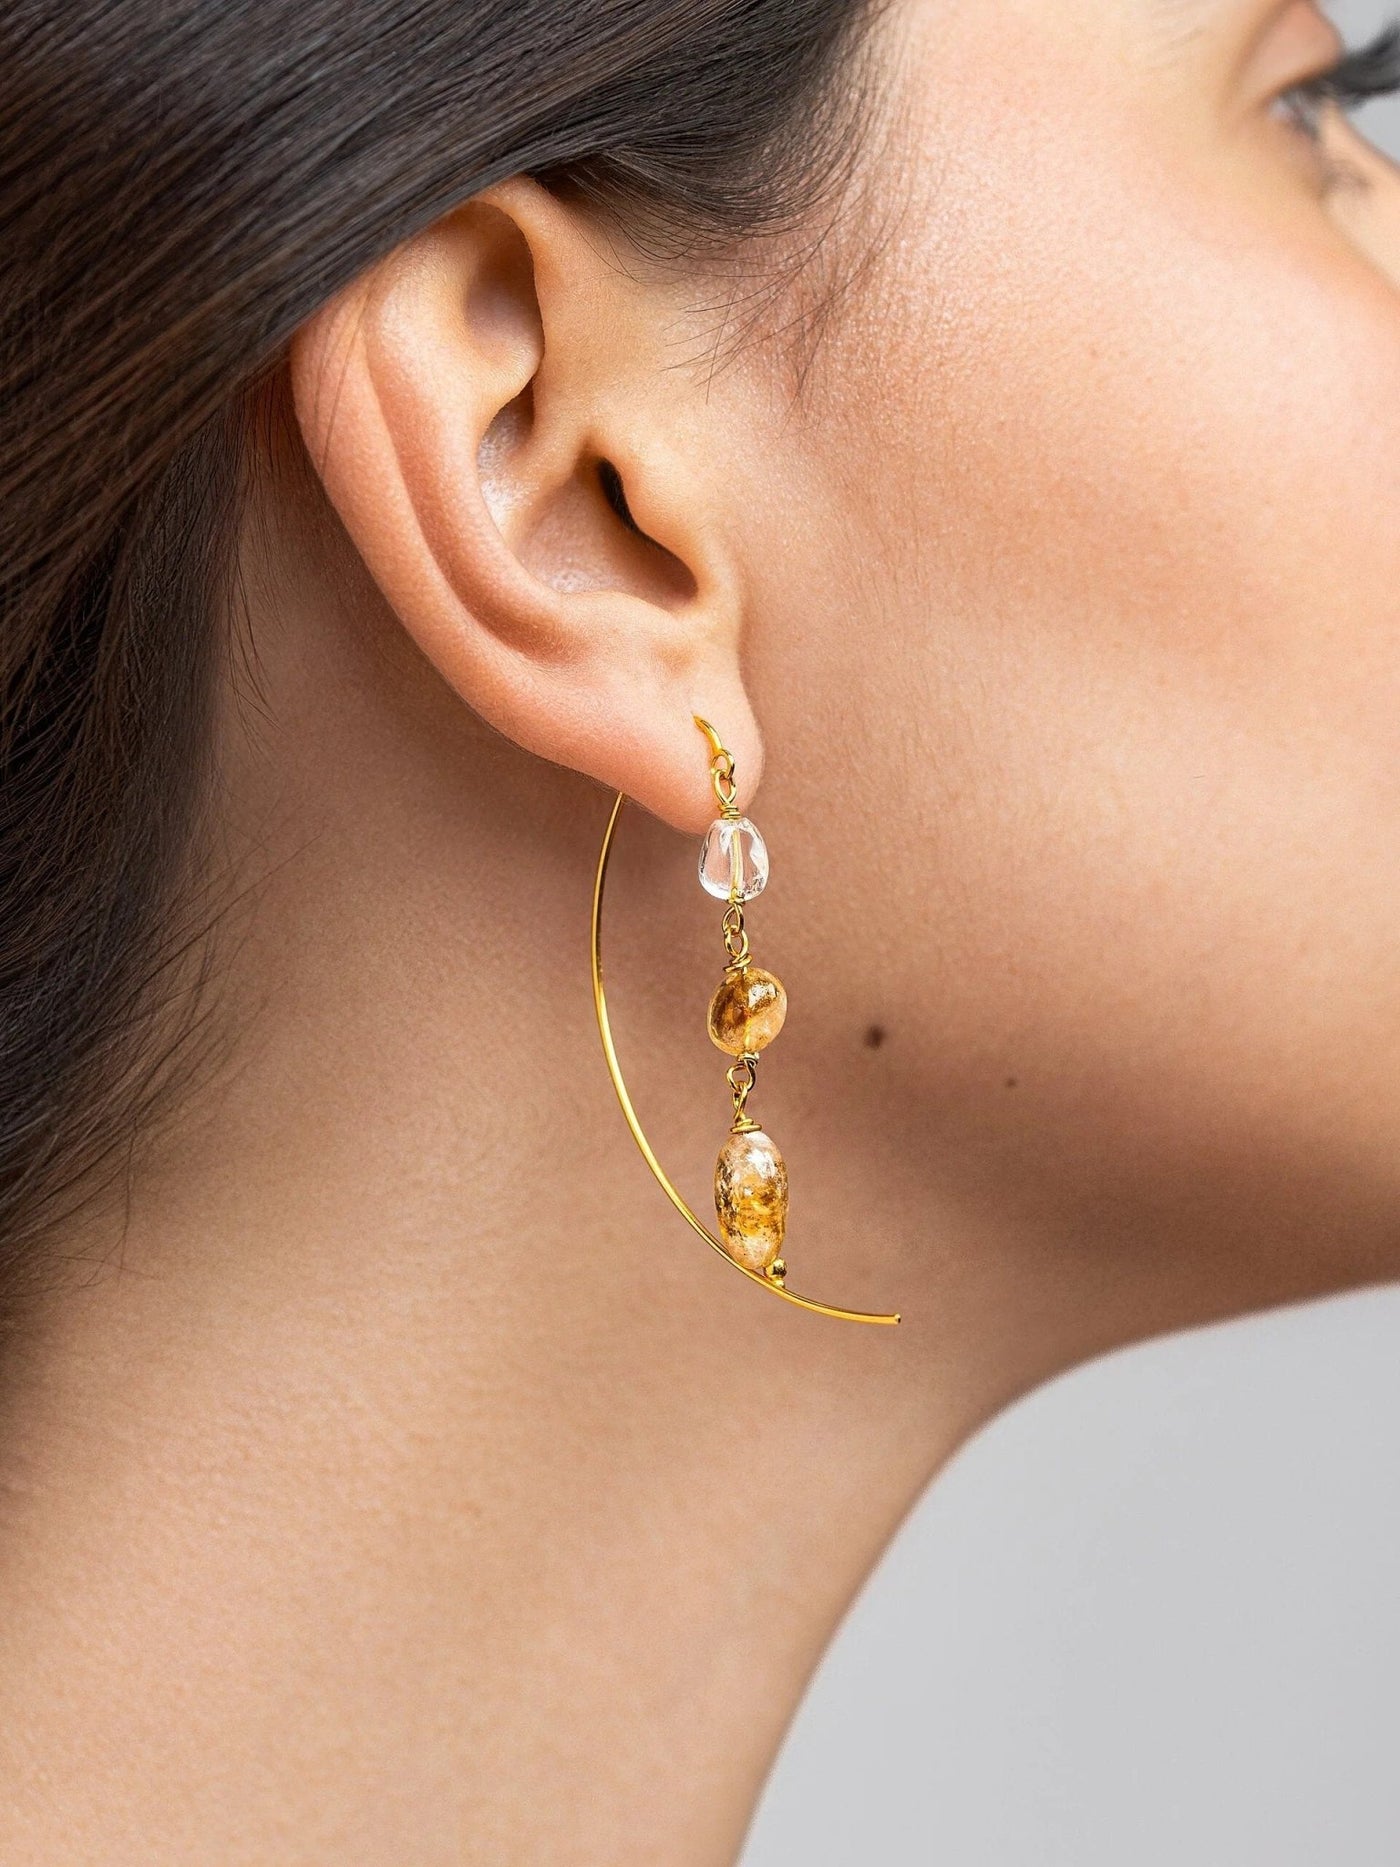 Liz Gold Citrine Hoop Earrings - Natural Prehniteboho earringschandelier earringsLunai Jewelry